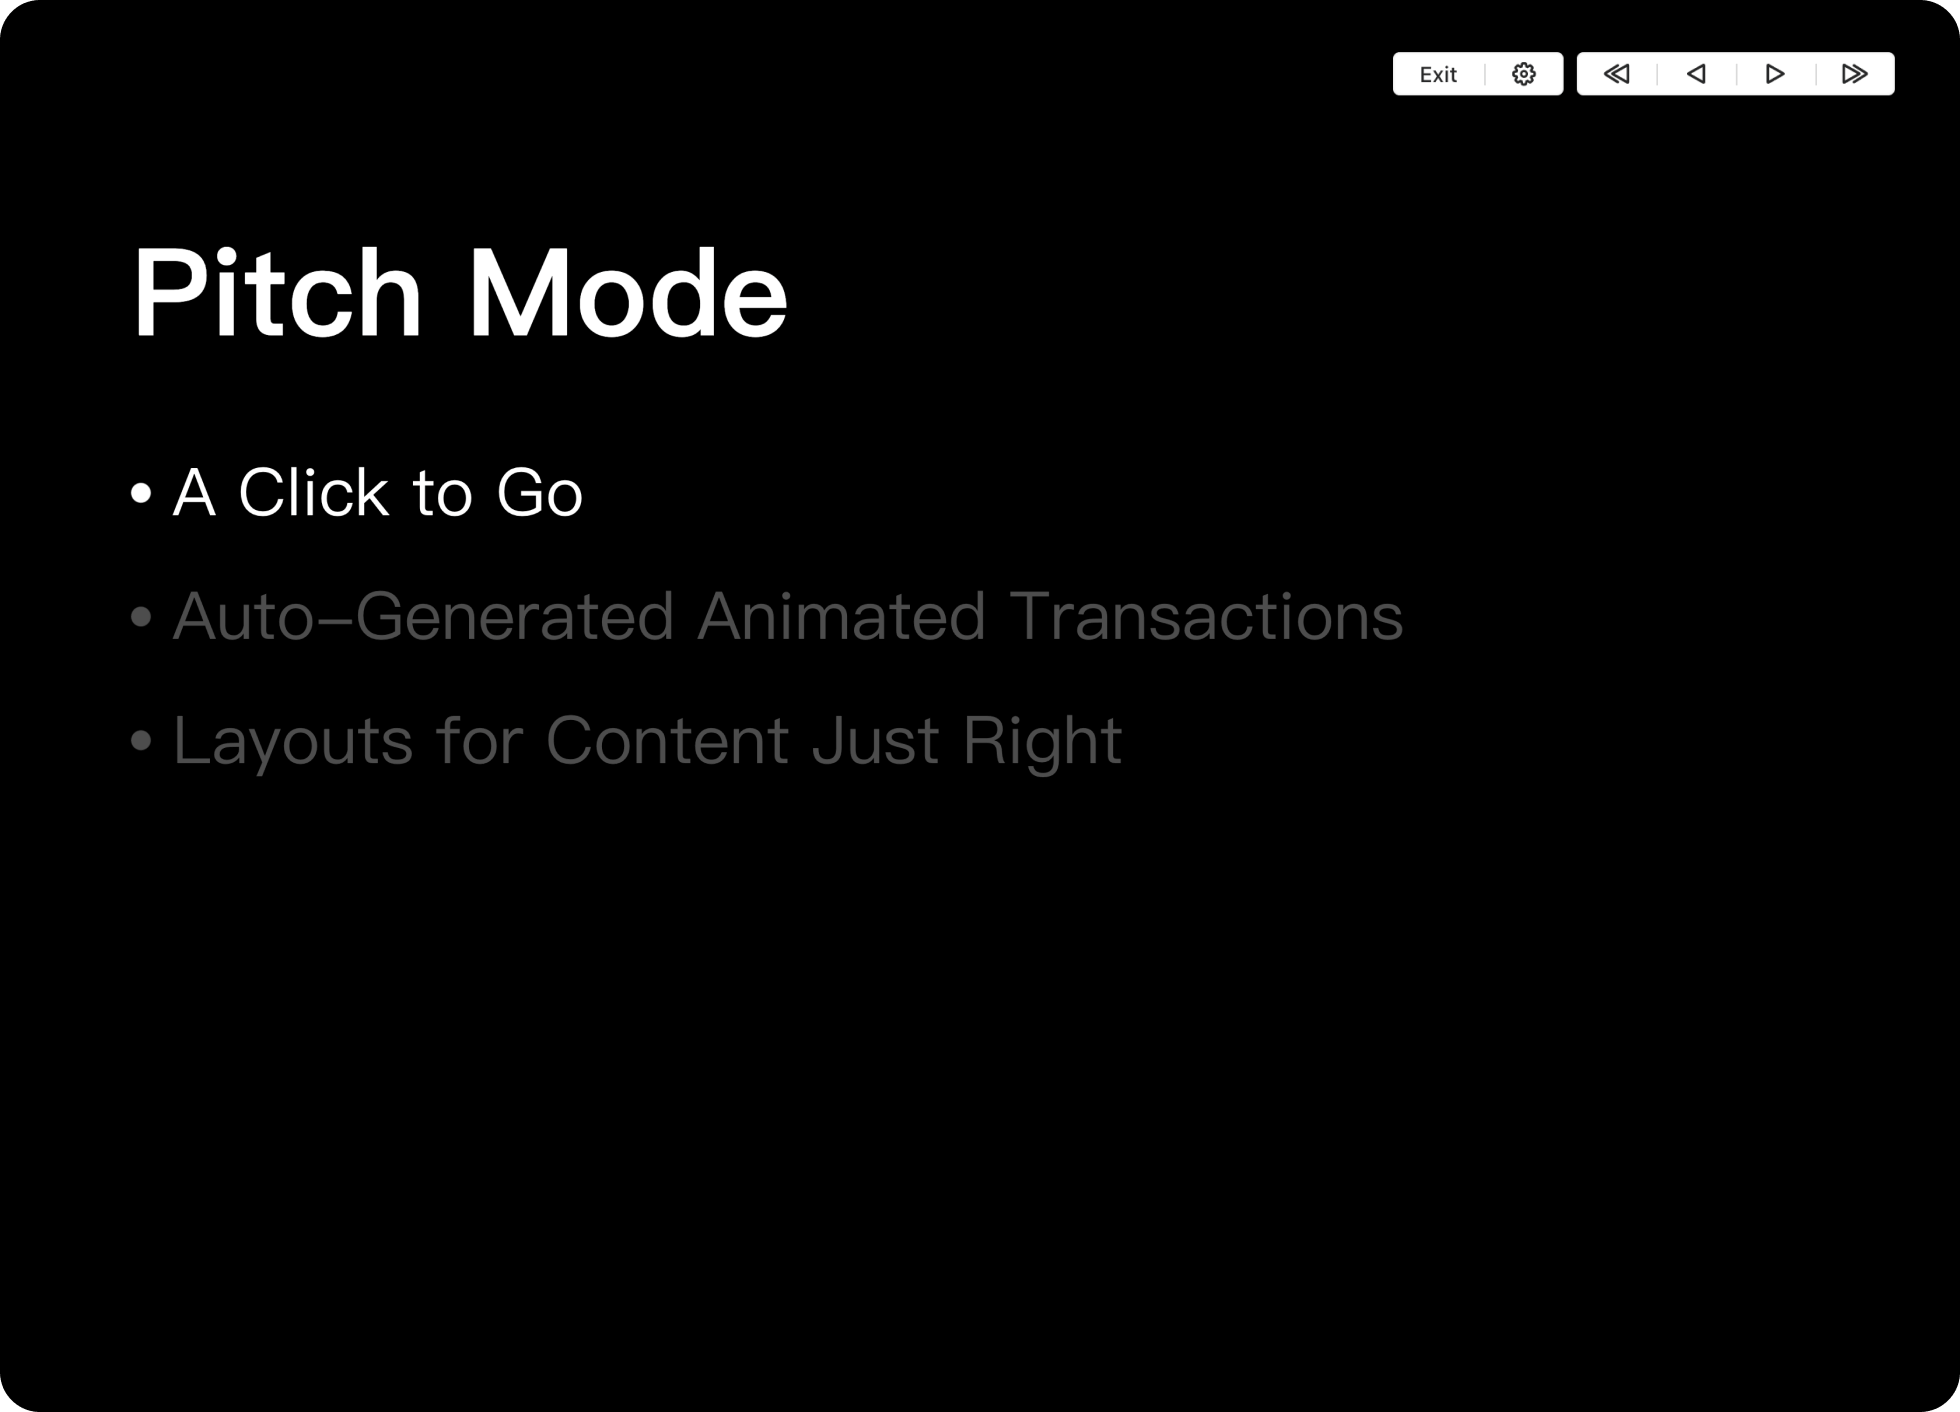 Pitch Mode